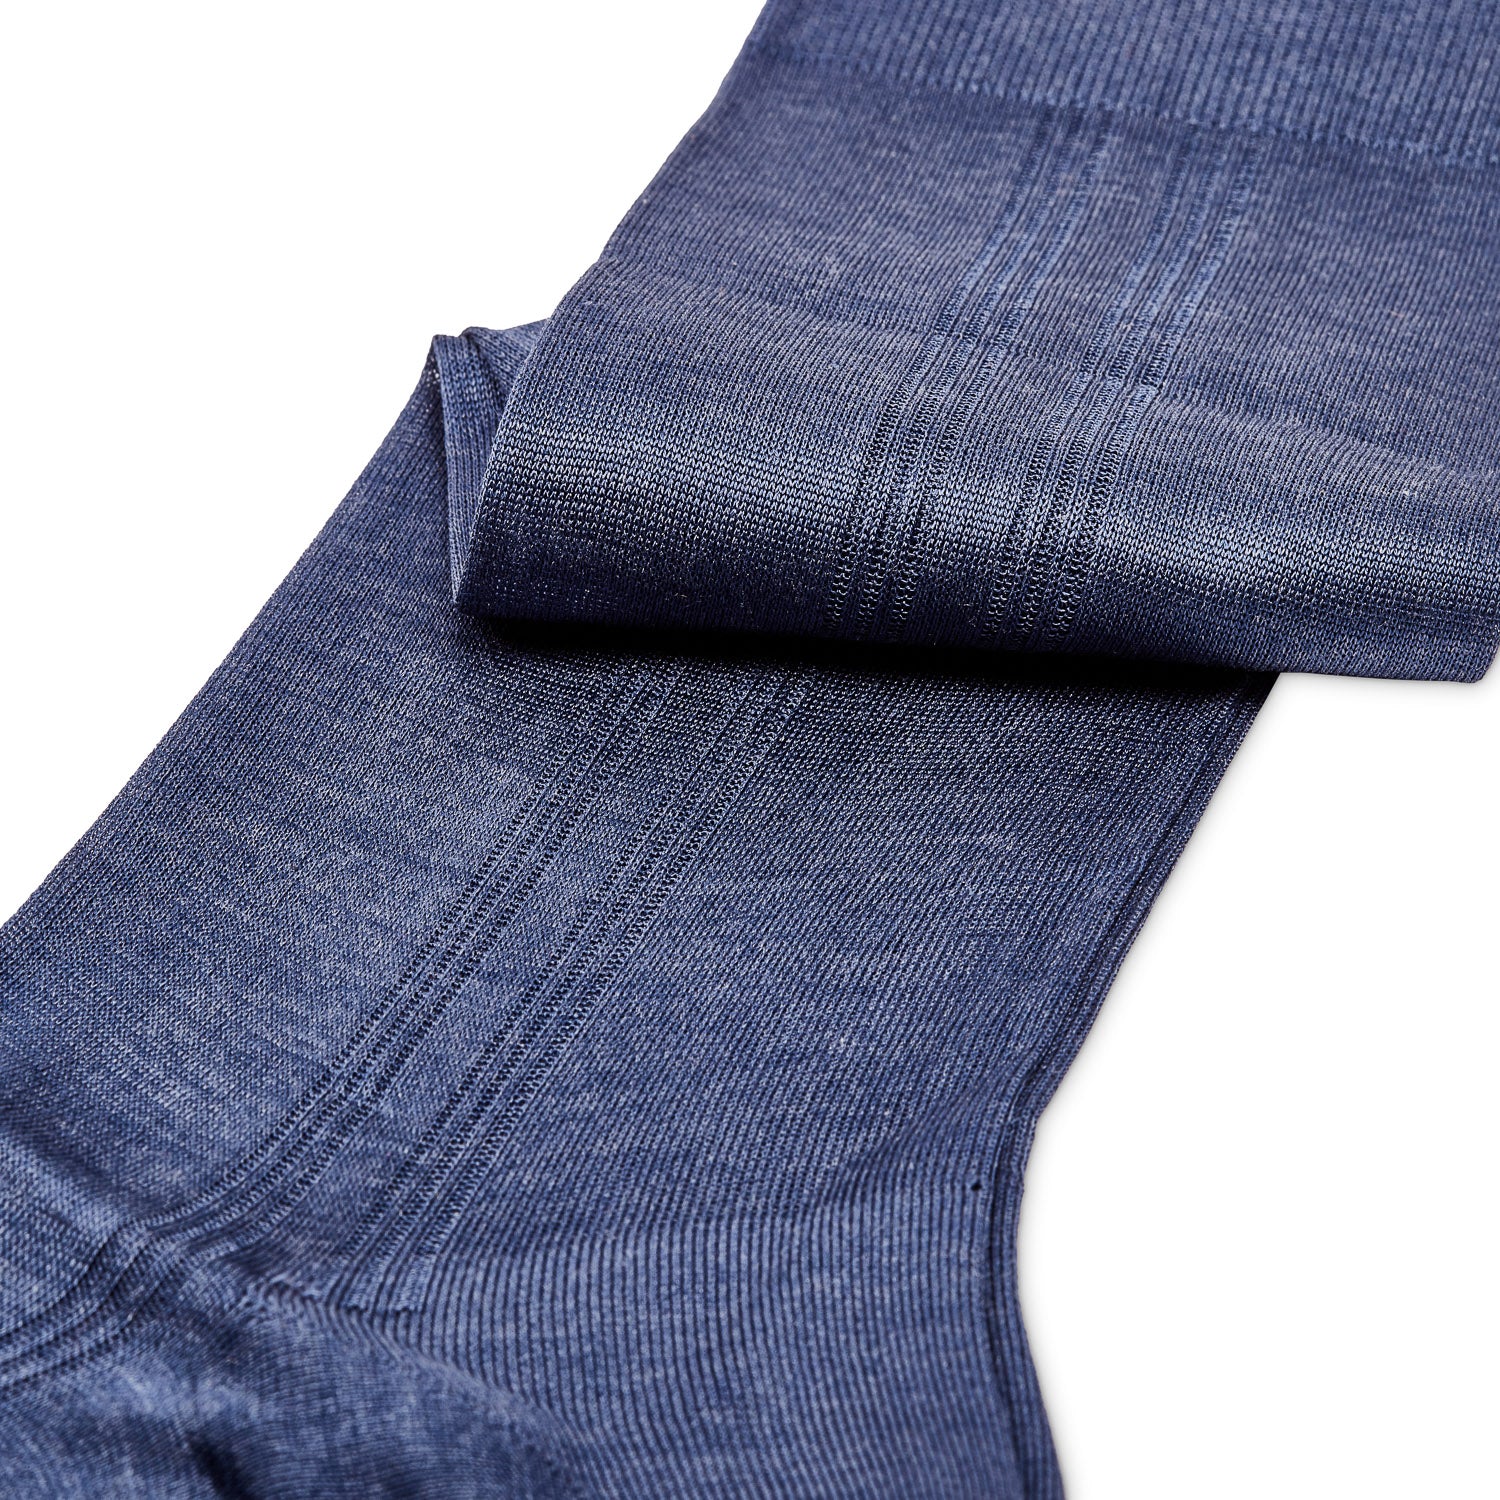 A pair of Sovereign Grade Super-Fine 100% Silk OTC Socks by KirbyAllison.com on a white background.